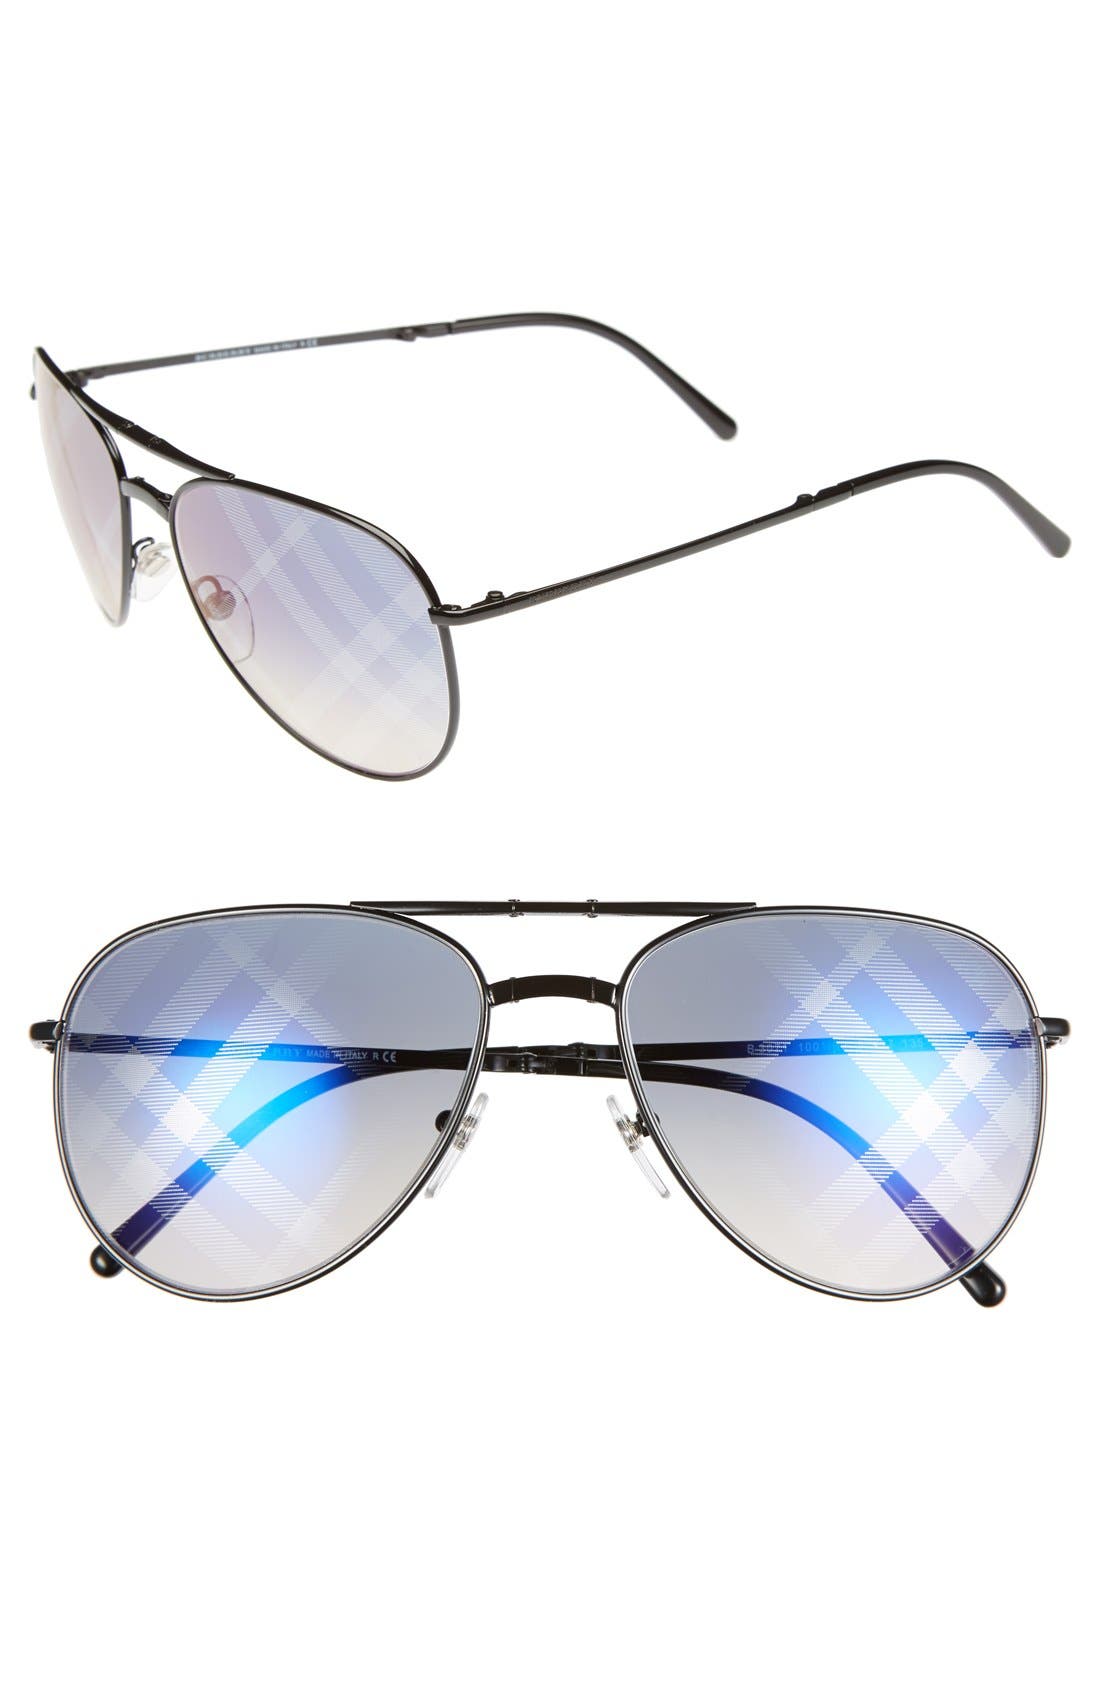 burberry sunglasses foldable